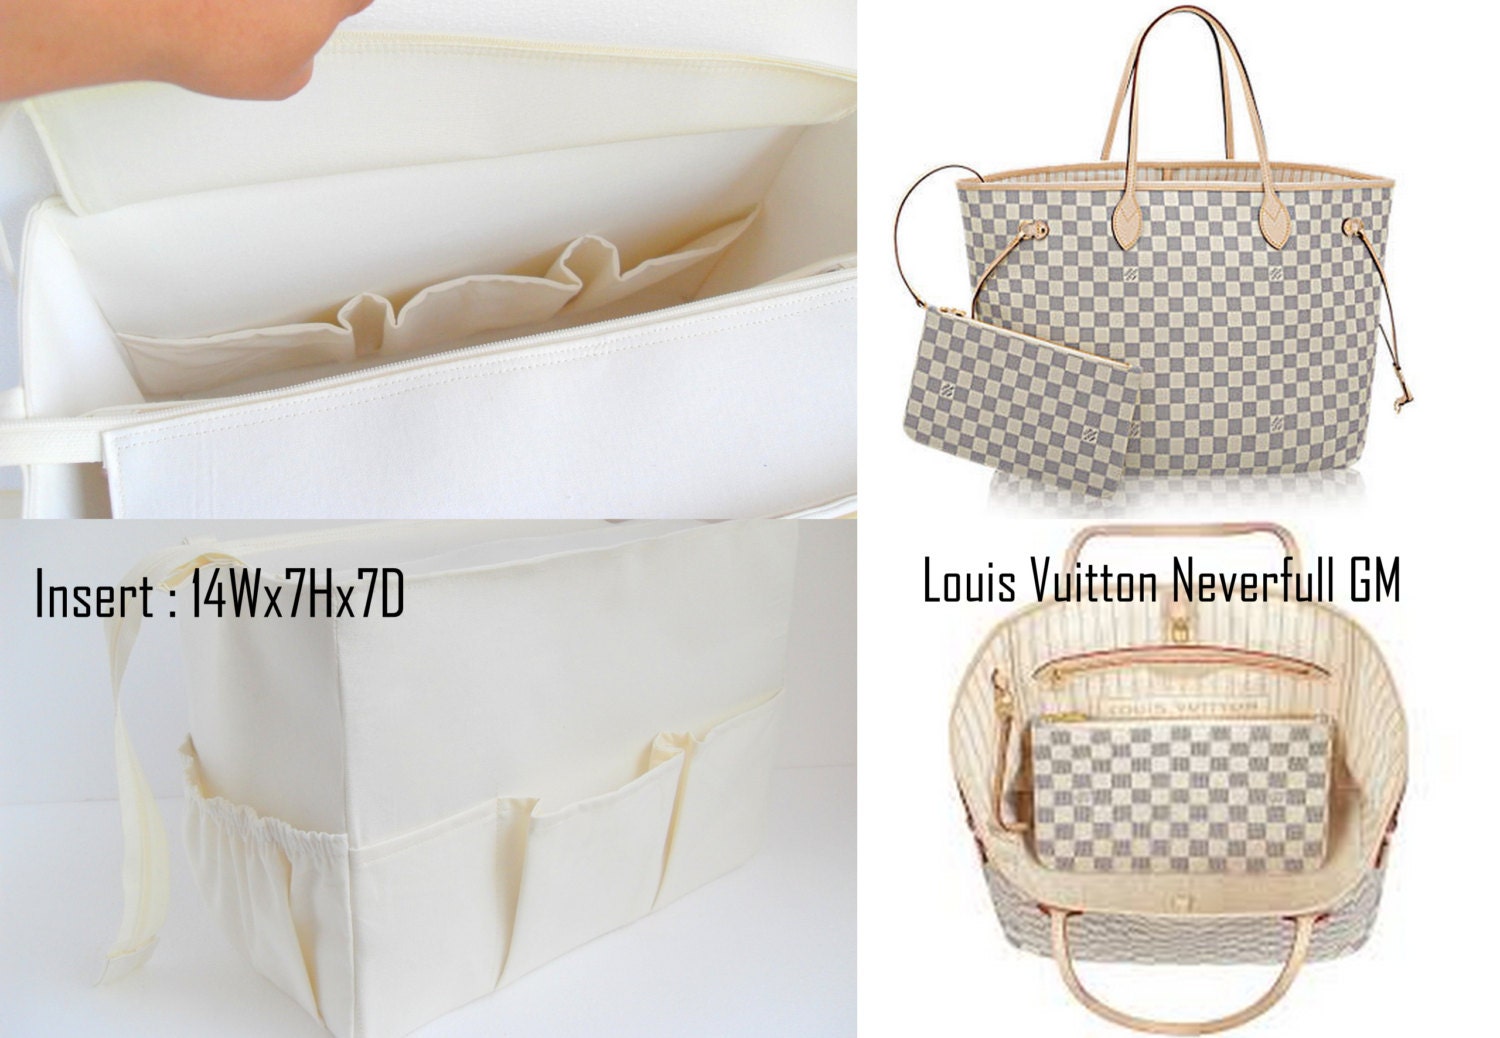 Extra Taller Bag Organizer for Louis Vuitton Neverfull GM 